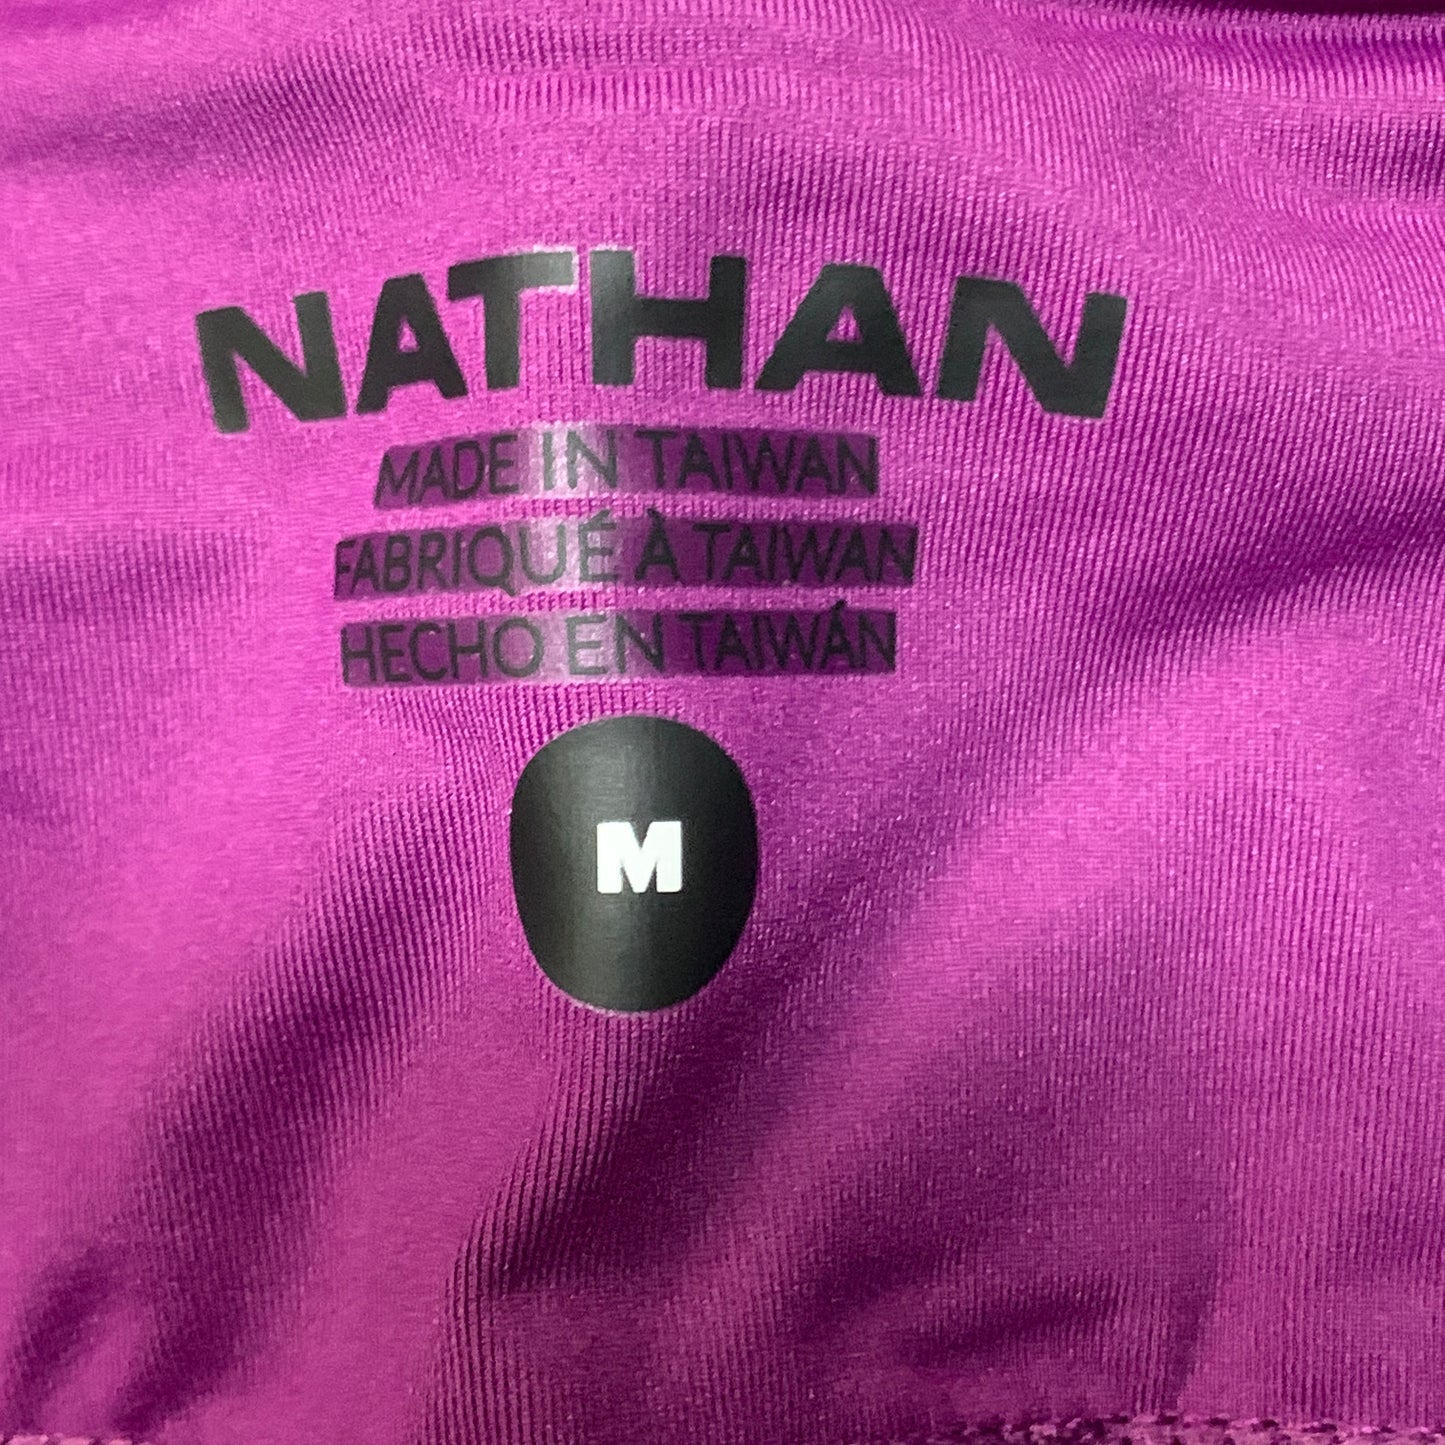 NATHAN Interval 3" Inseam Bike Short Women's Plum Size M NS51040-70030-M